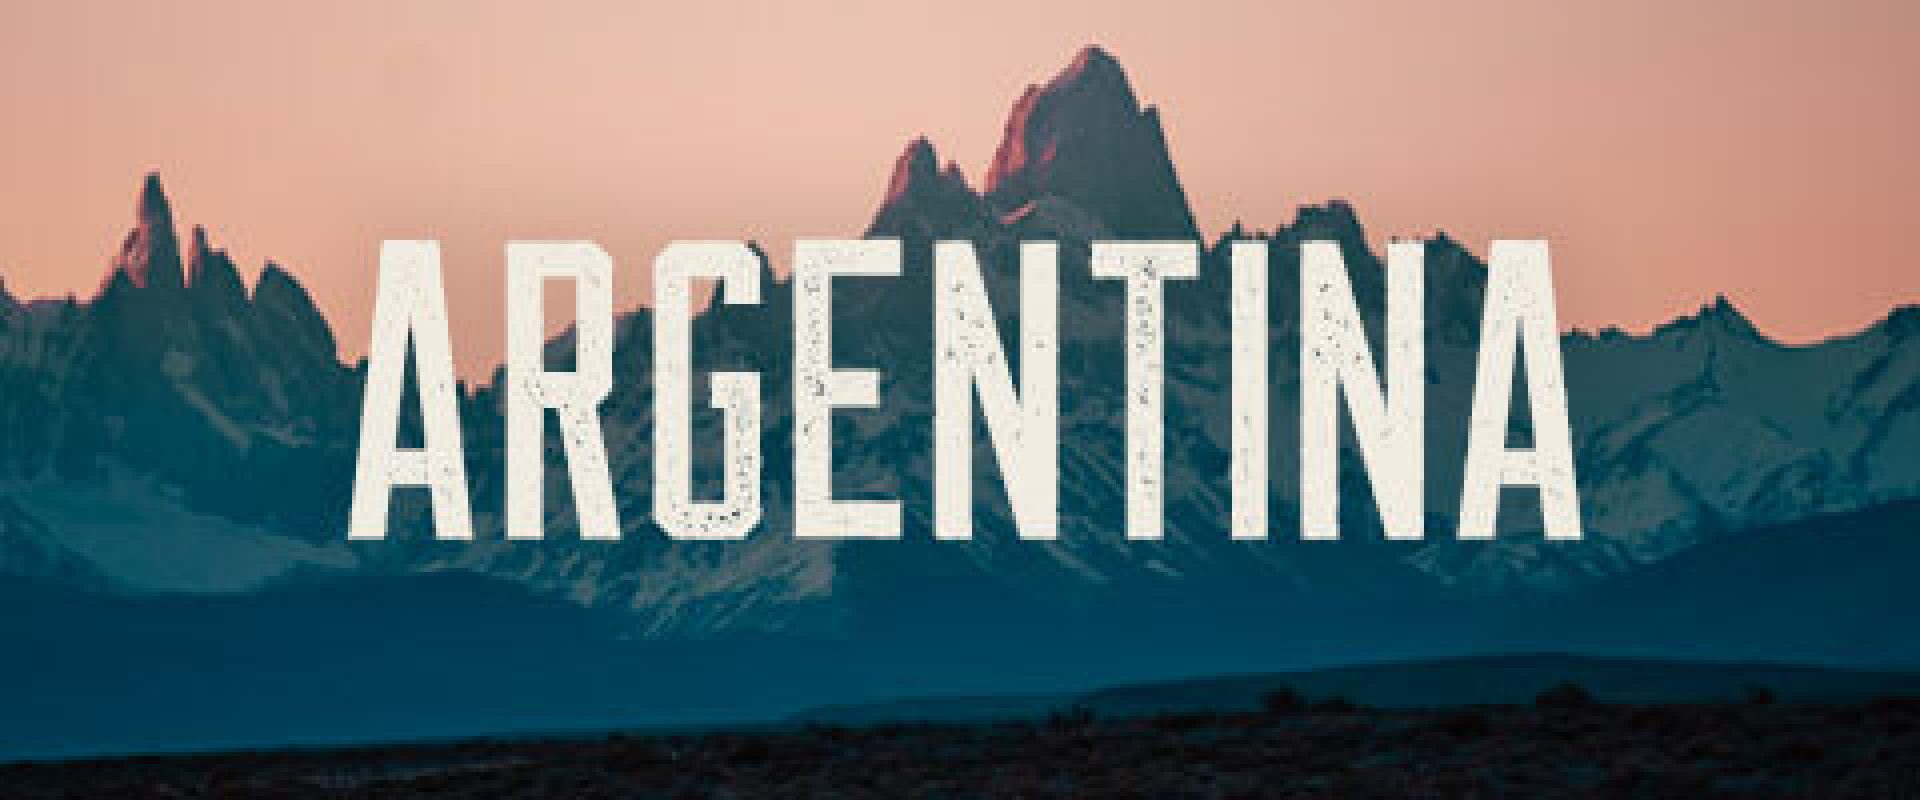 OnVagabonde_Argentina_Banners_mobile-EN